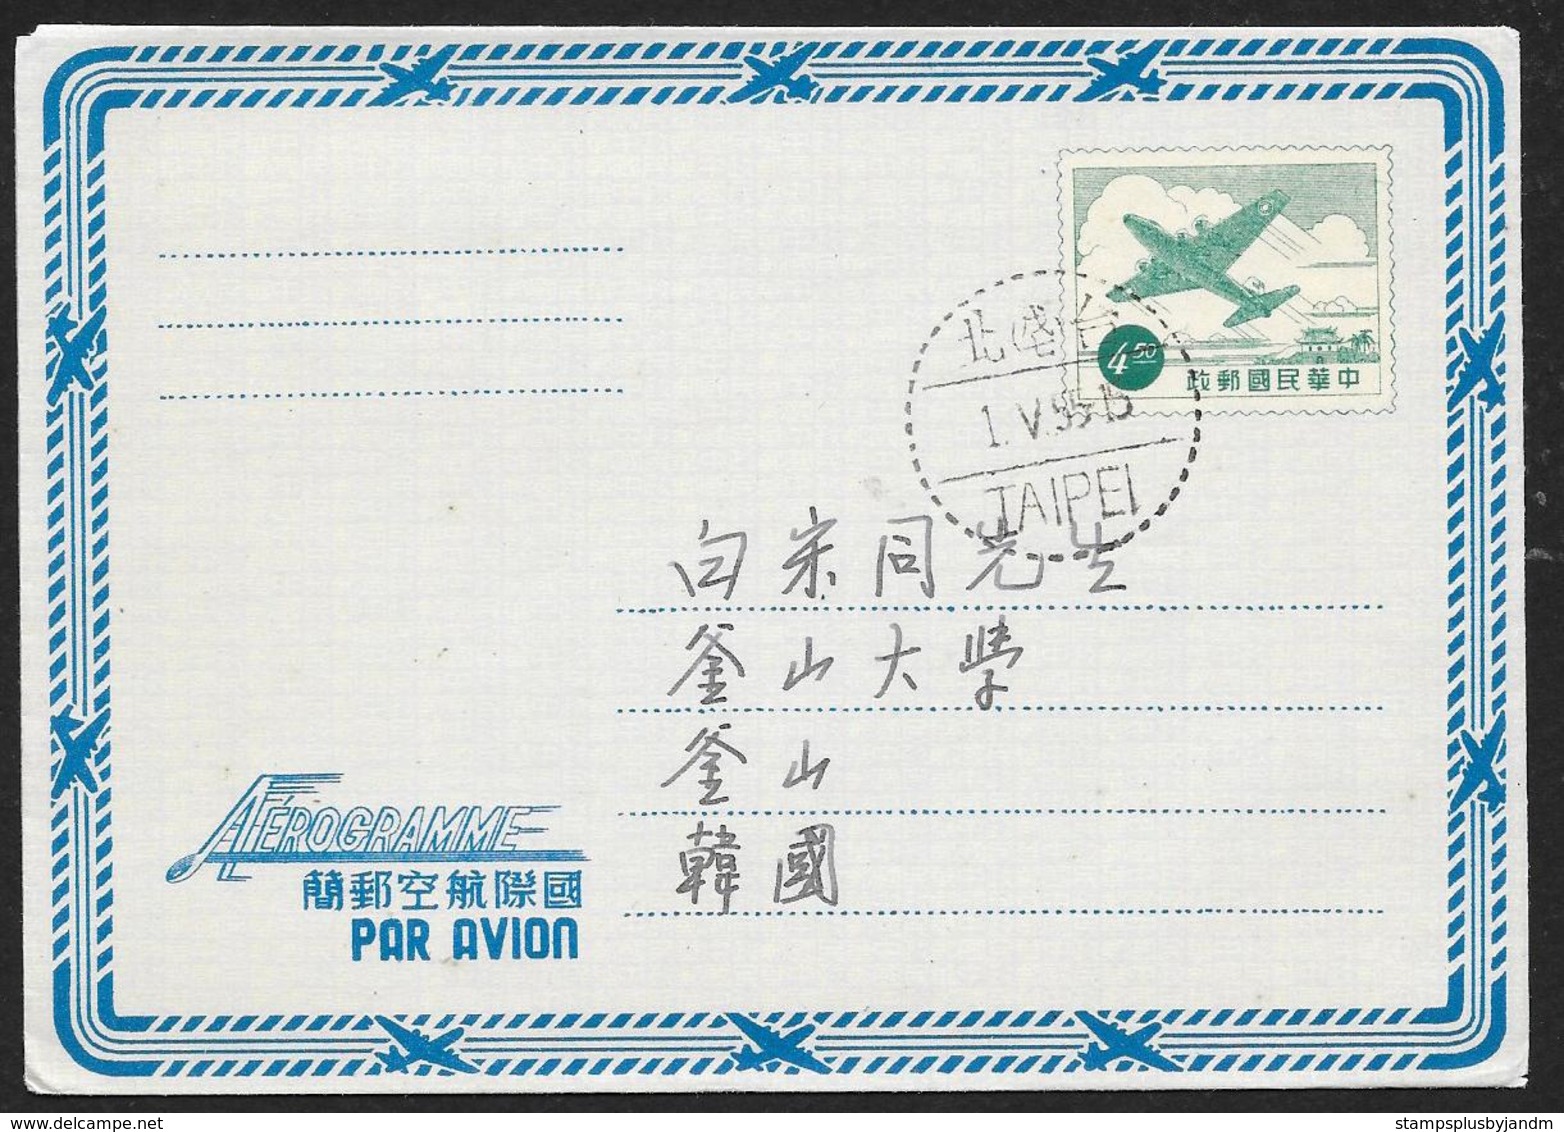 REPUBLIC OF CHINA (TAIWAN) Aerogramme $4.50 Airplane 1955 Taipei Cancel! STK#X21217 - Postal Stationery